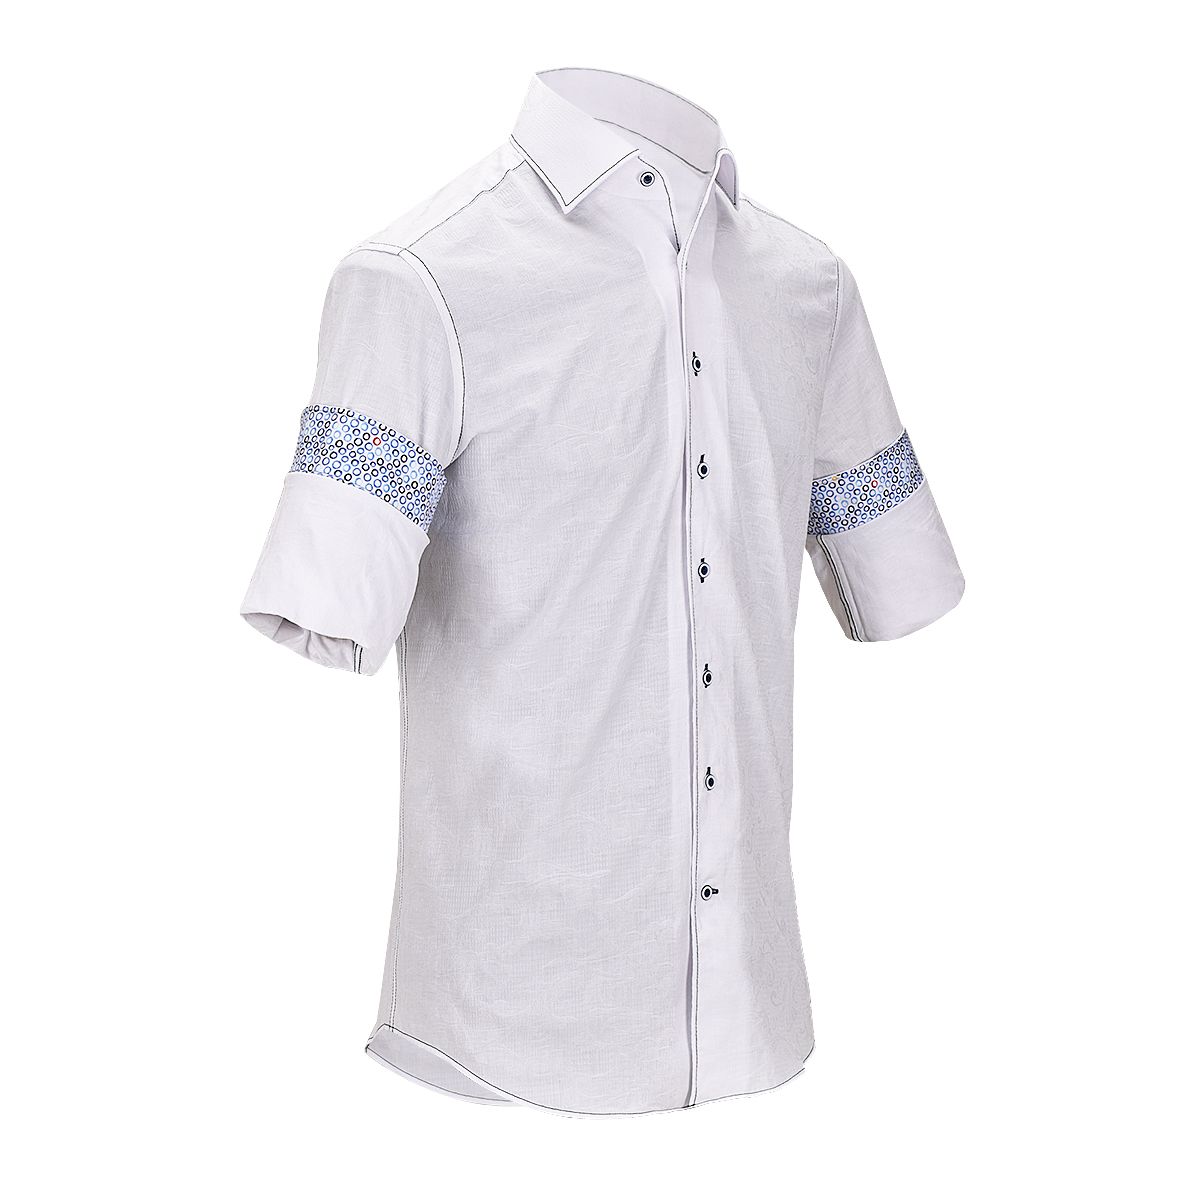 CMW466R - Cuadra white fashion casual soft cotton paisley shirt for men-Kuet.us